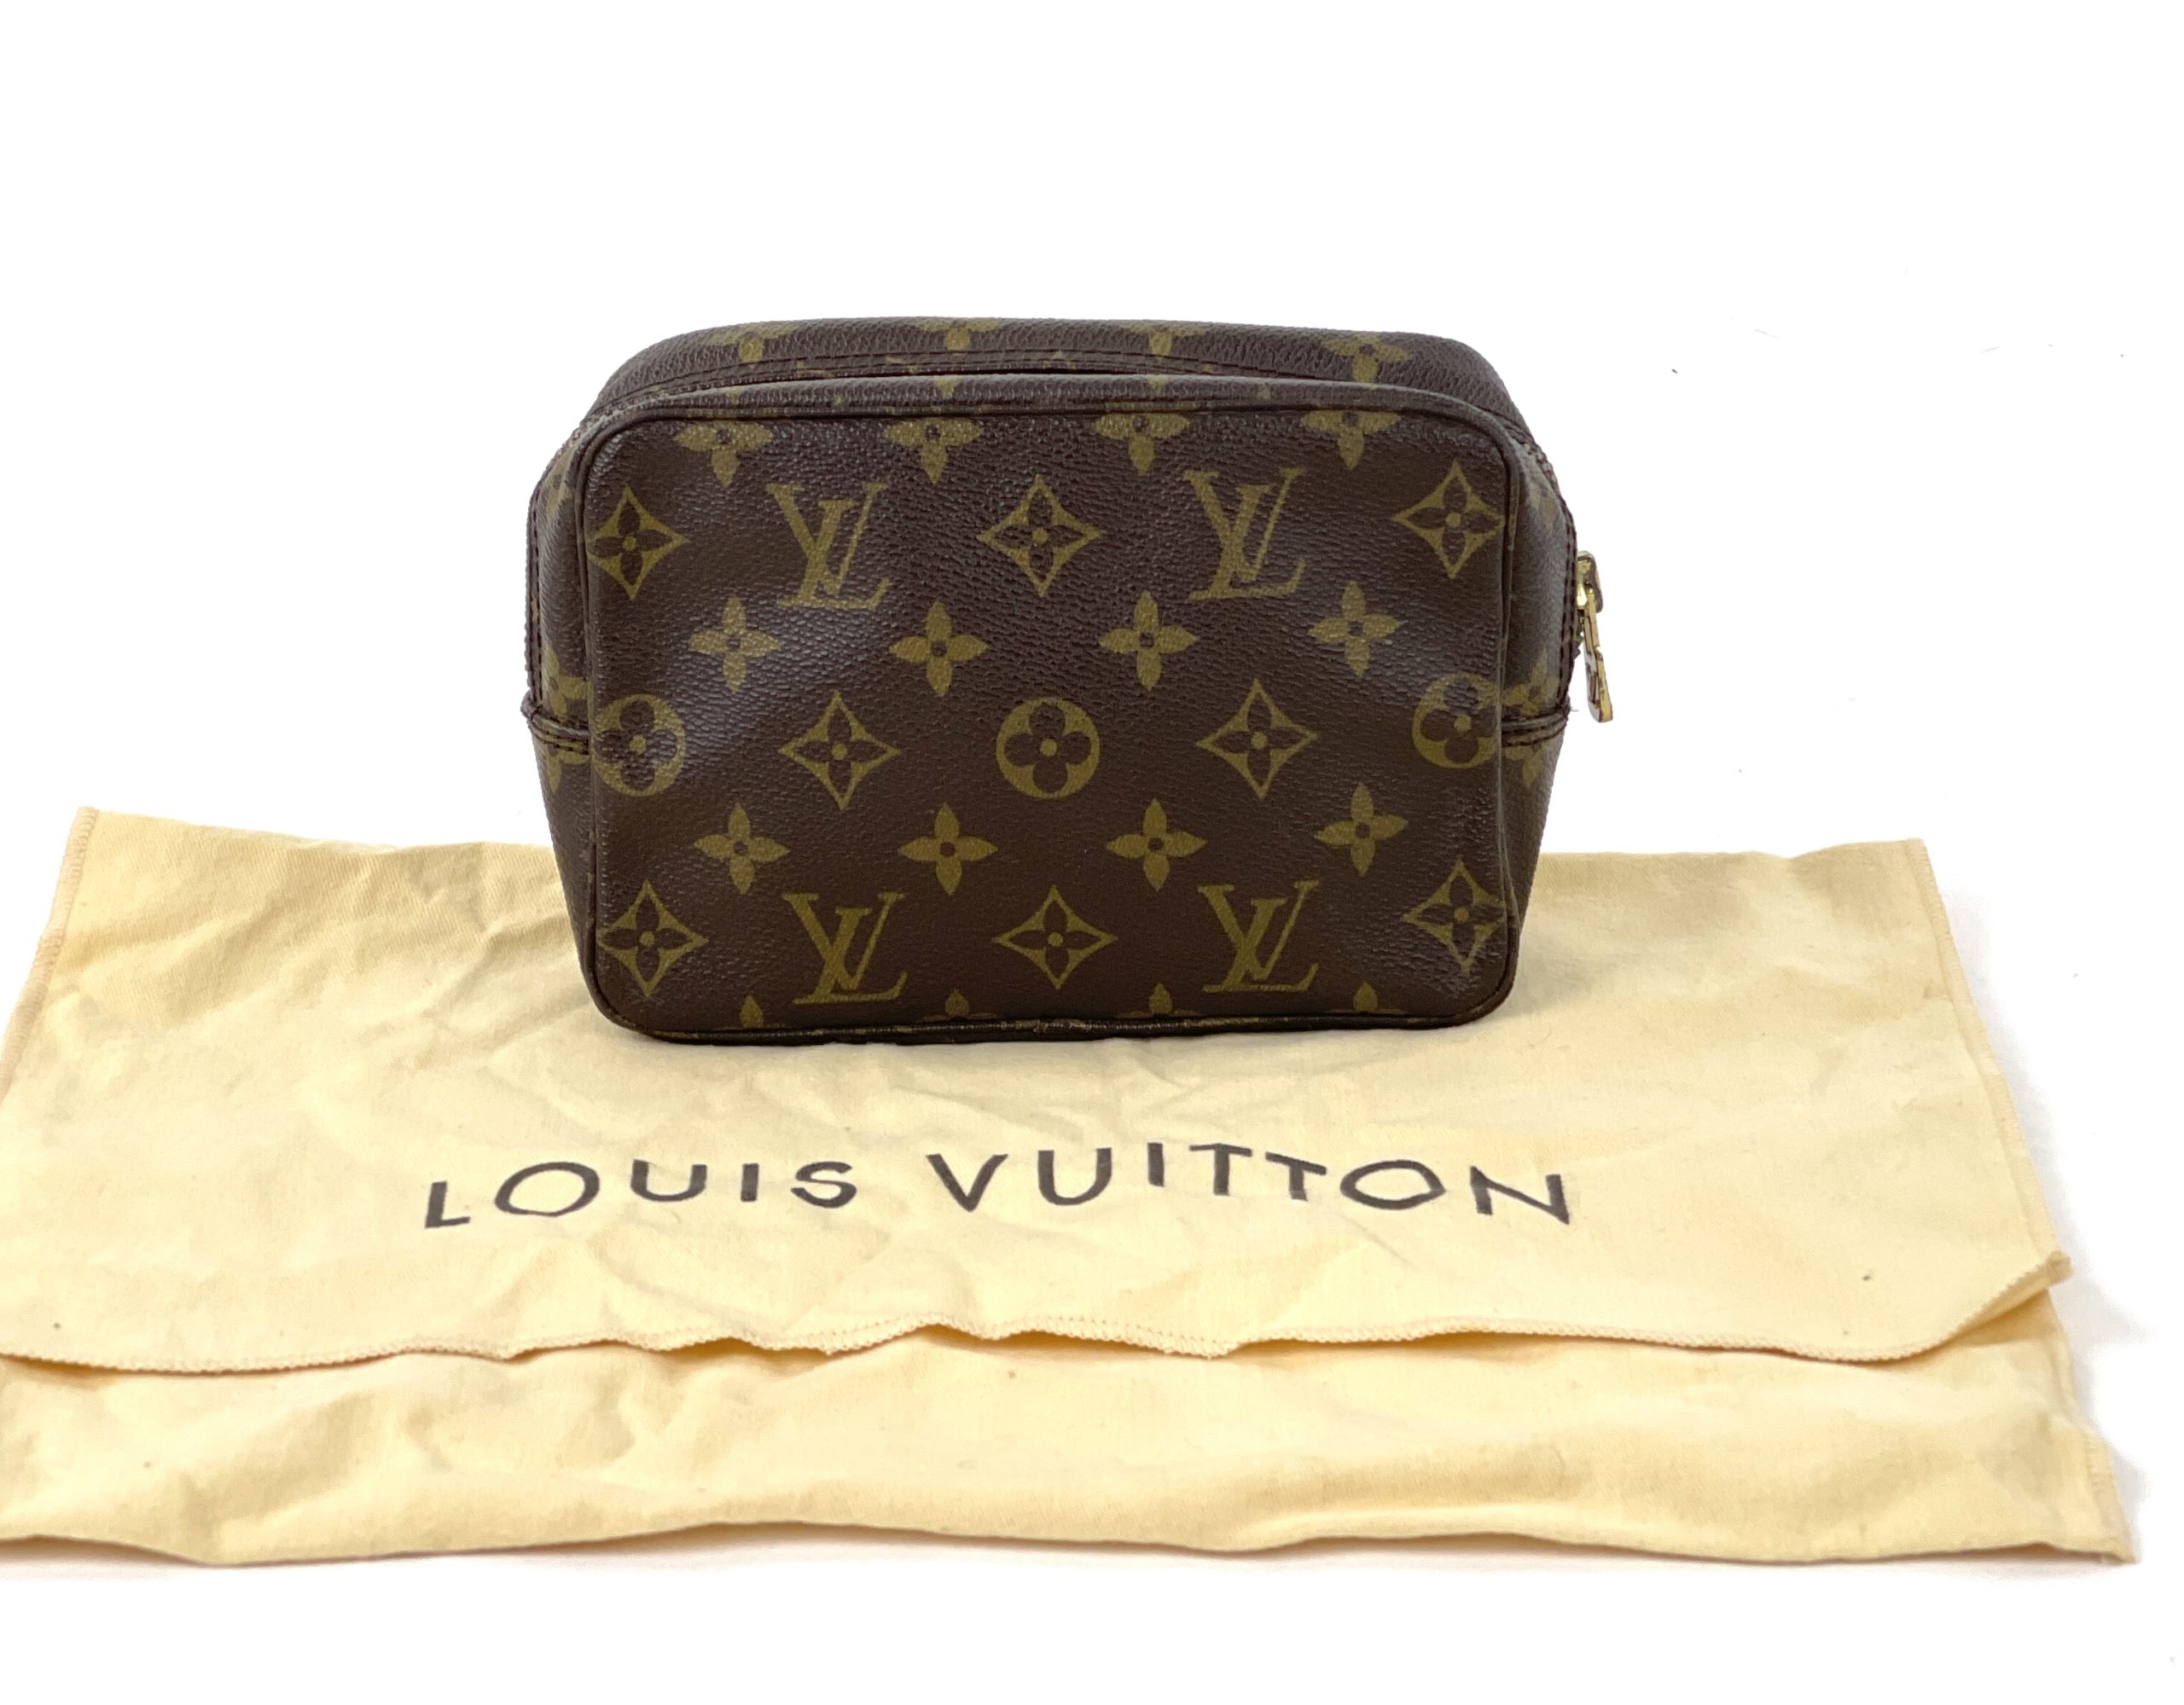 LOUIS VUITTON Monogram King Size Toiletry Bag 1243118